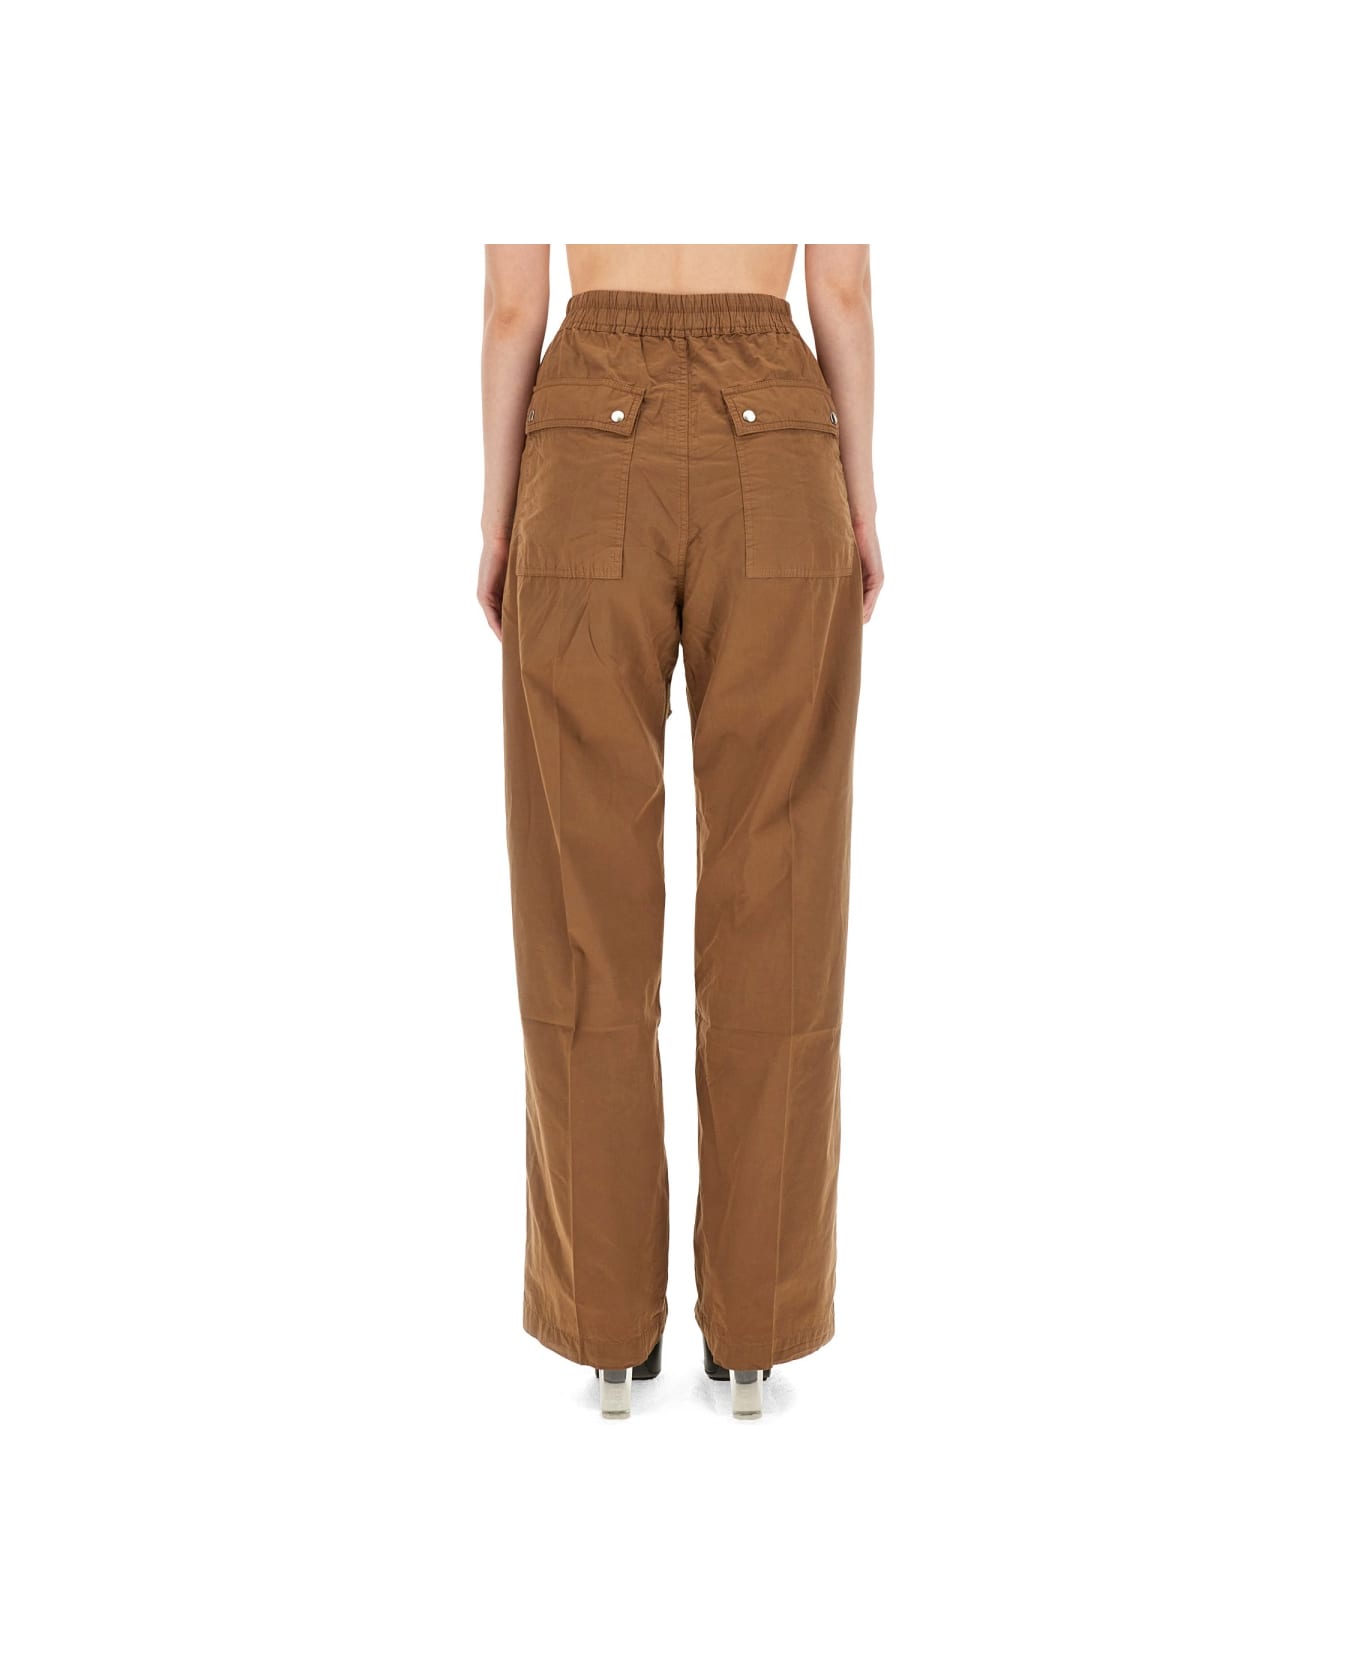 DRKSHDW Cotton Pants - BROWN